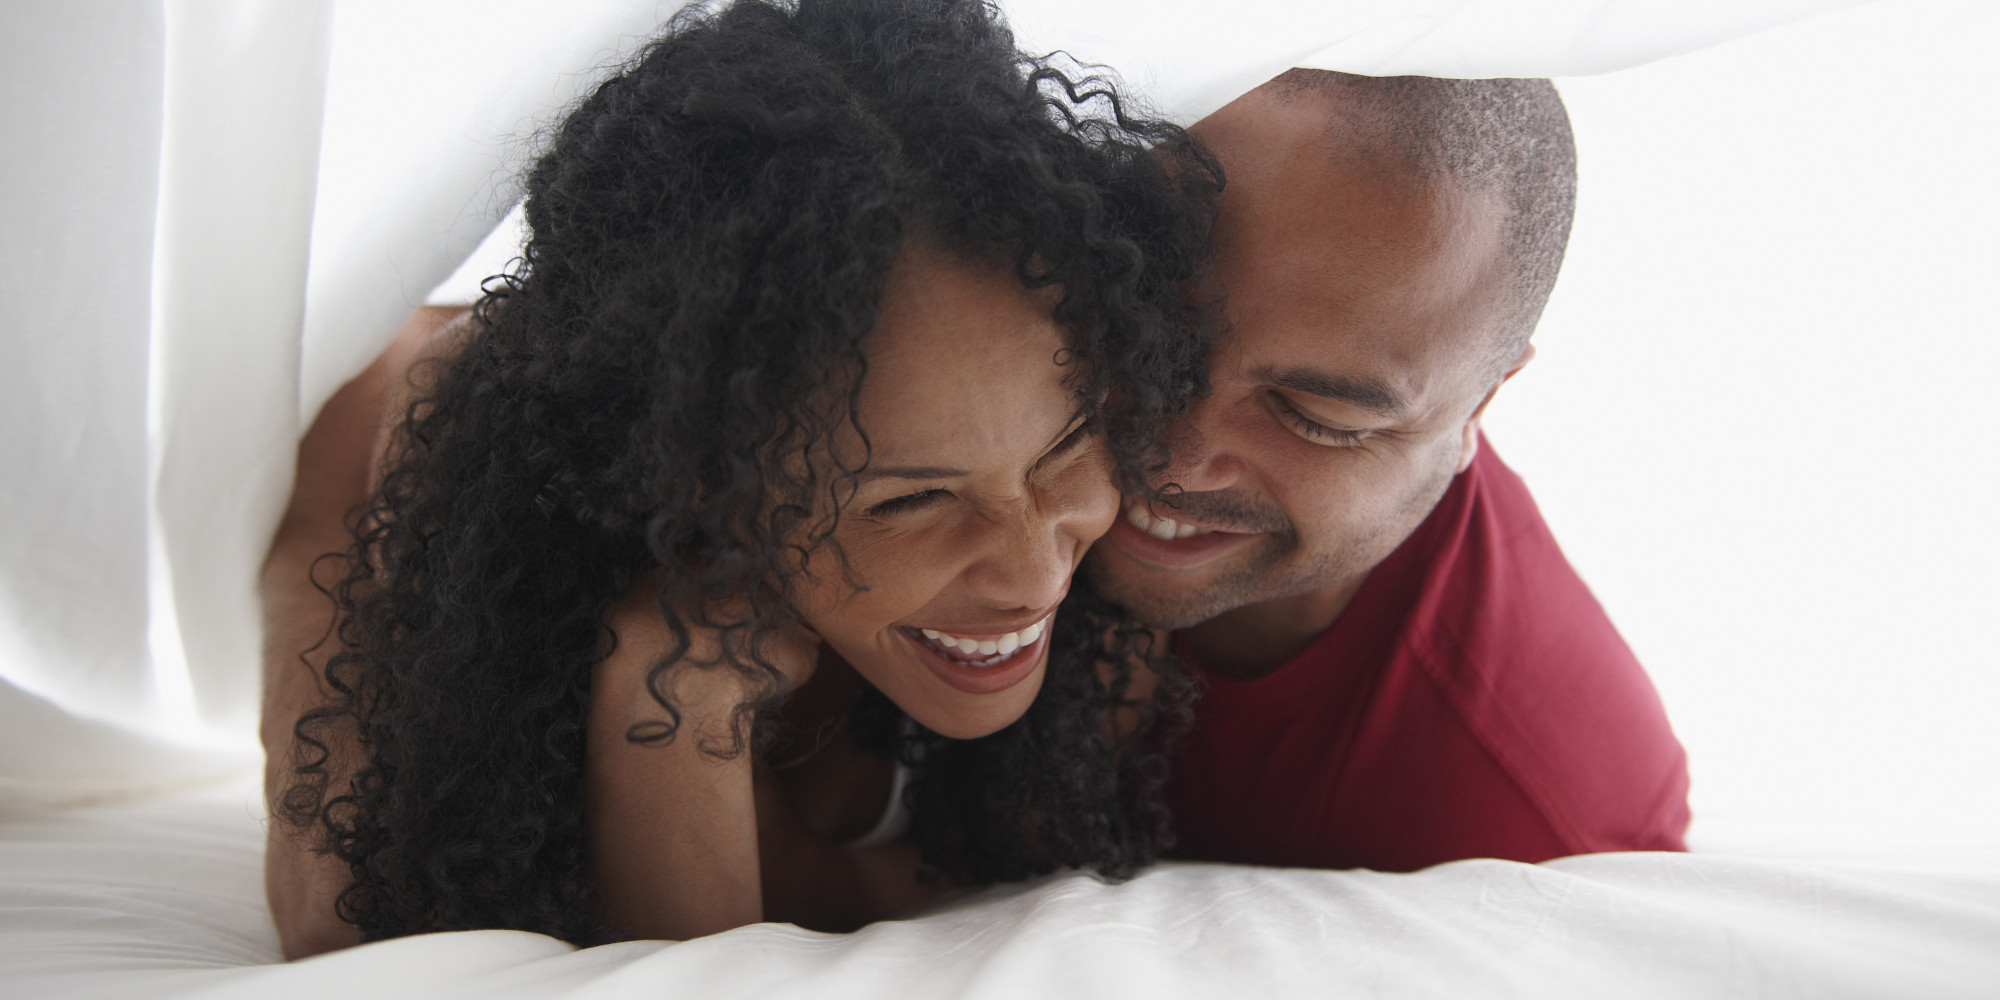 Smiling Black couple underneath sheet